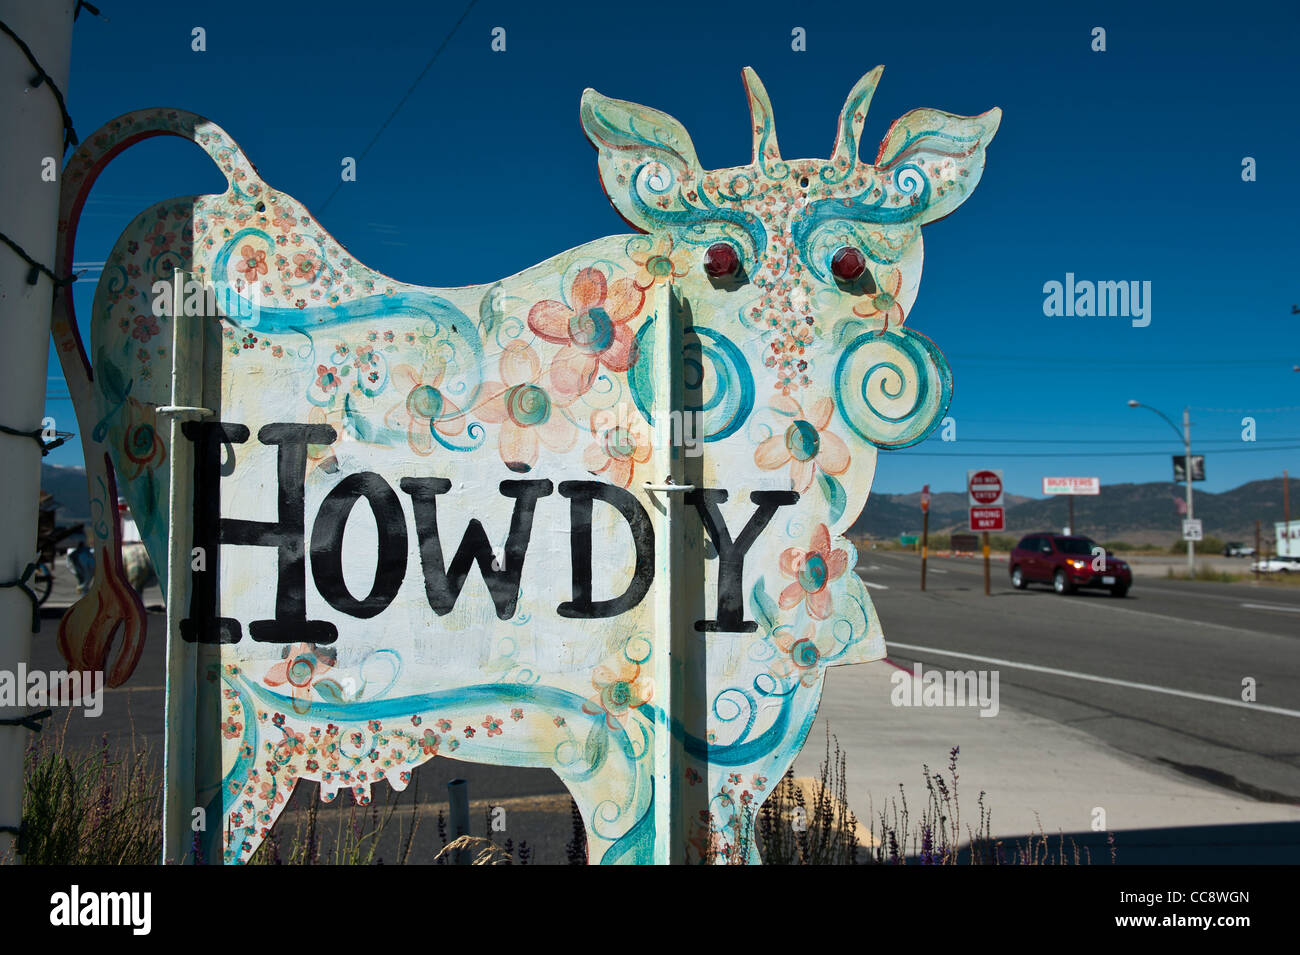 Howdy roadside decorative sign, Bridgeport, Mono County, California, United States Stock Photo